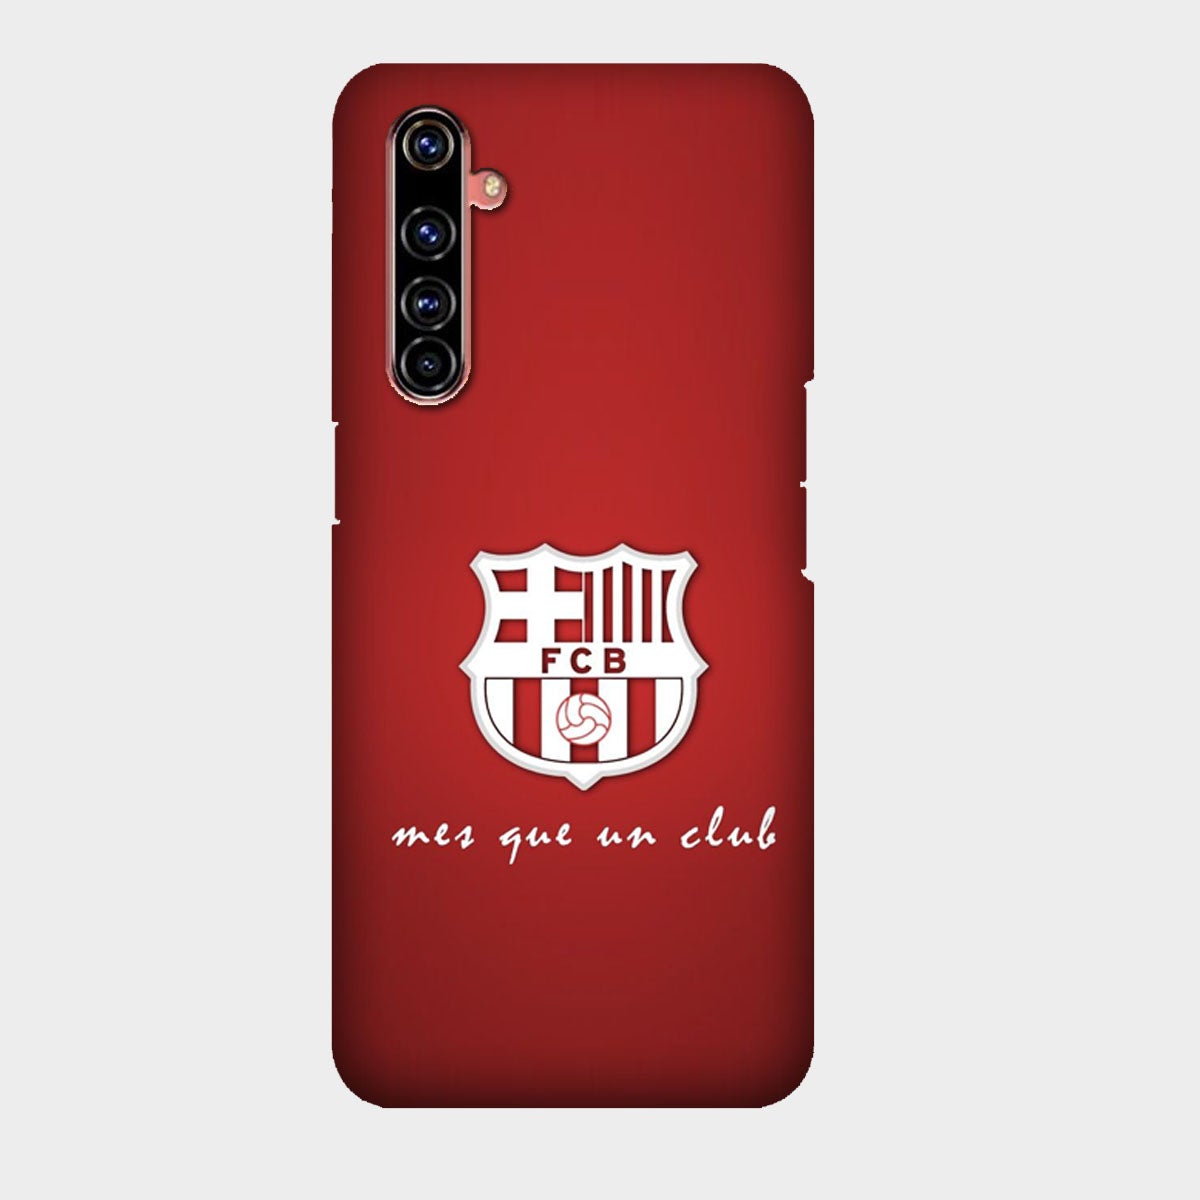 FC Barcelona - Mes Que Un Club - Mobile Phone Cover - Hard Case